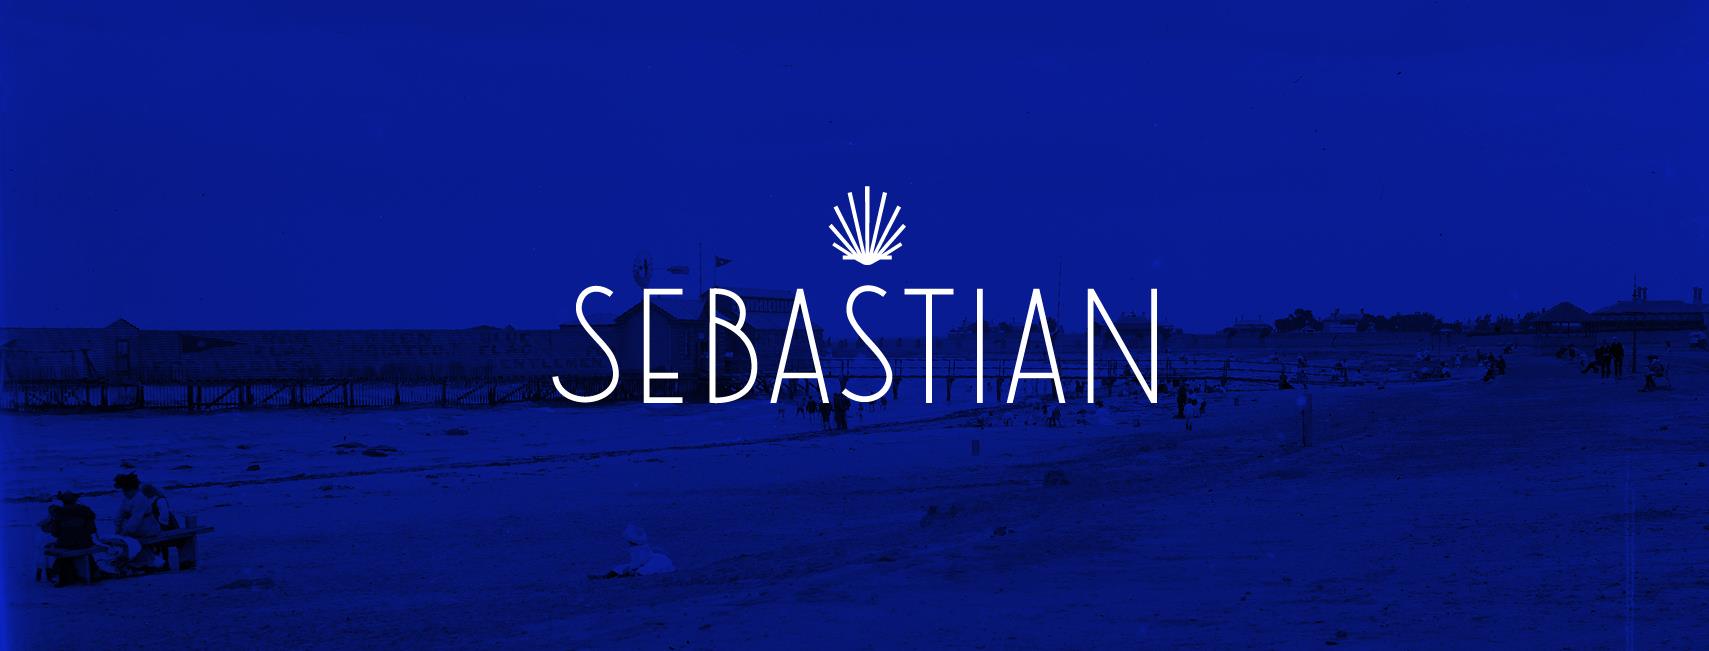 Sebastian Beach Grill & Bar